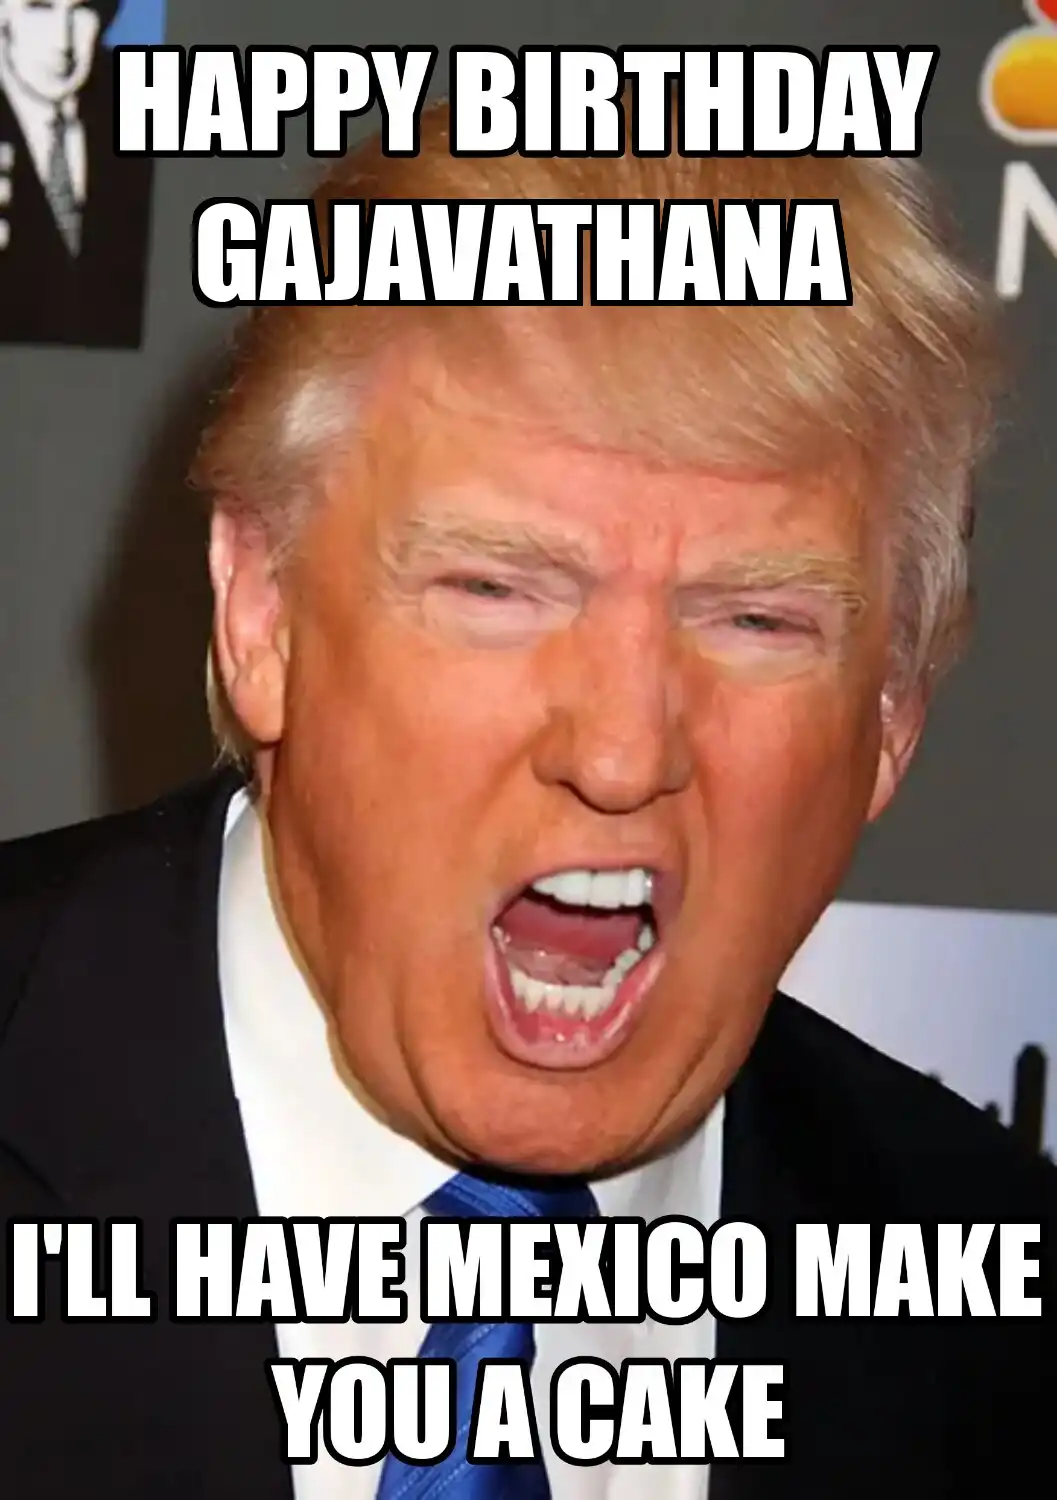 Happy Birthday Gajavathana Mexico Make You A Cake Meme